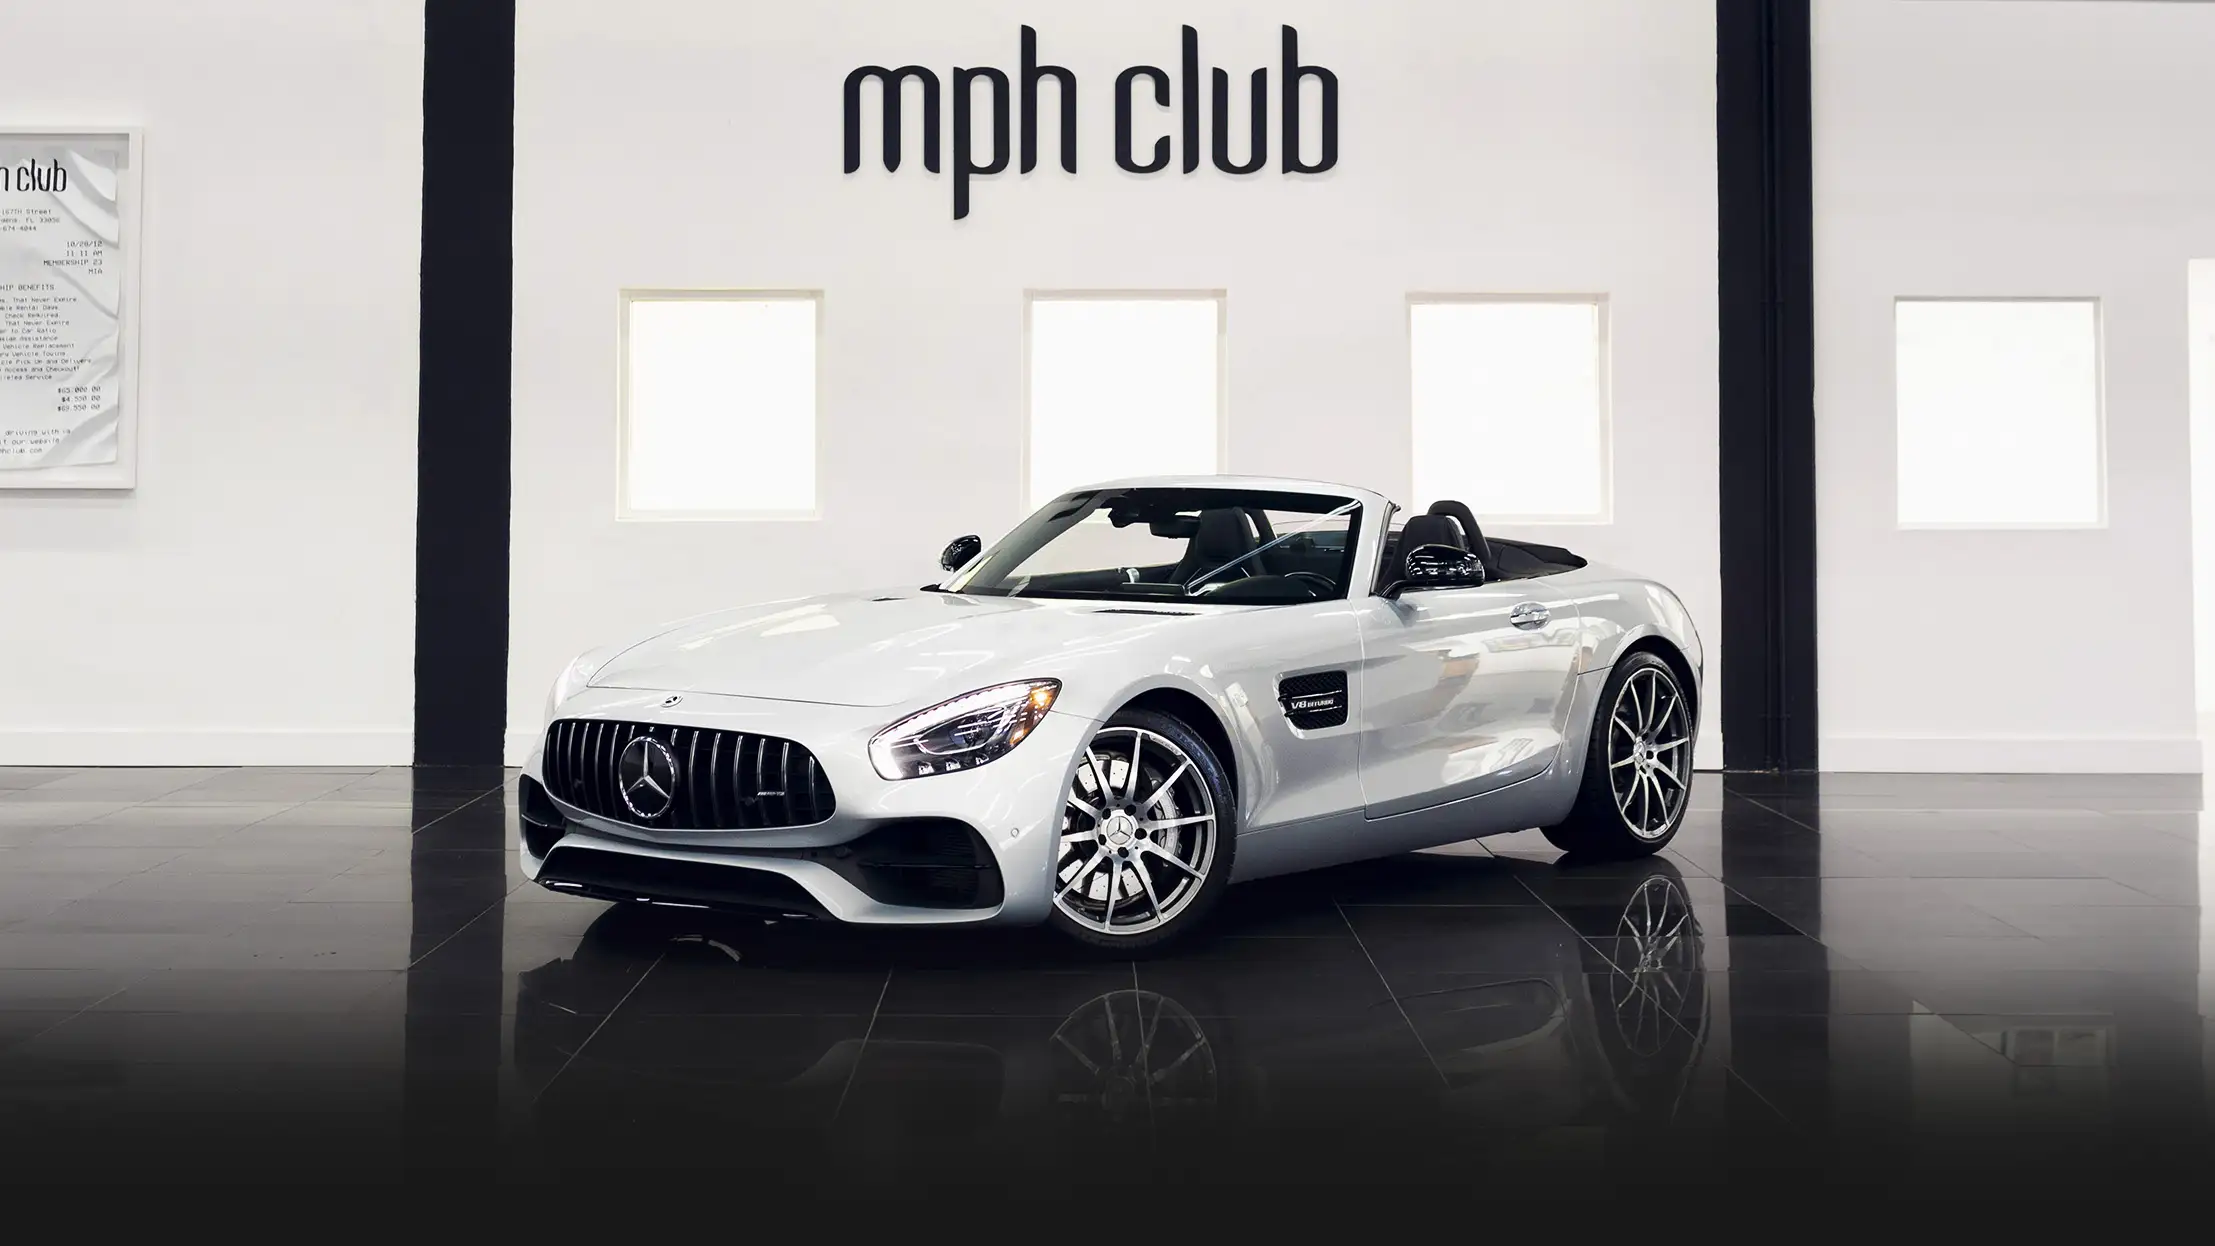 Gray Mercedes Benz GT Convertible rental profile view mph club